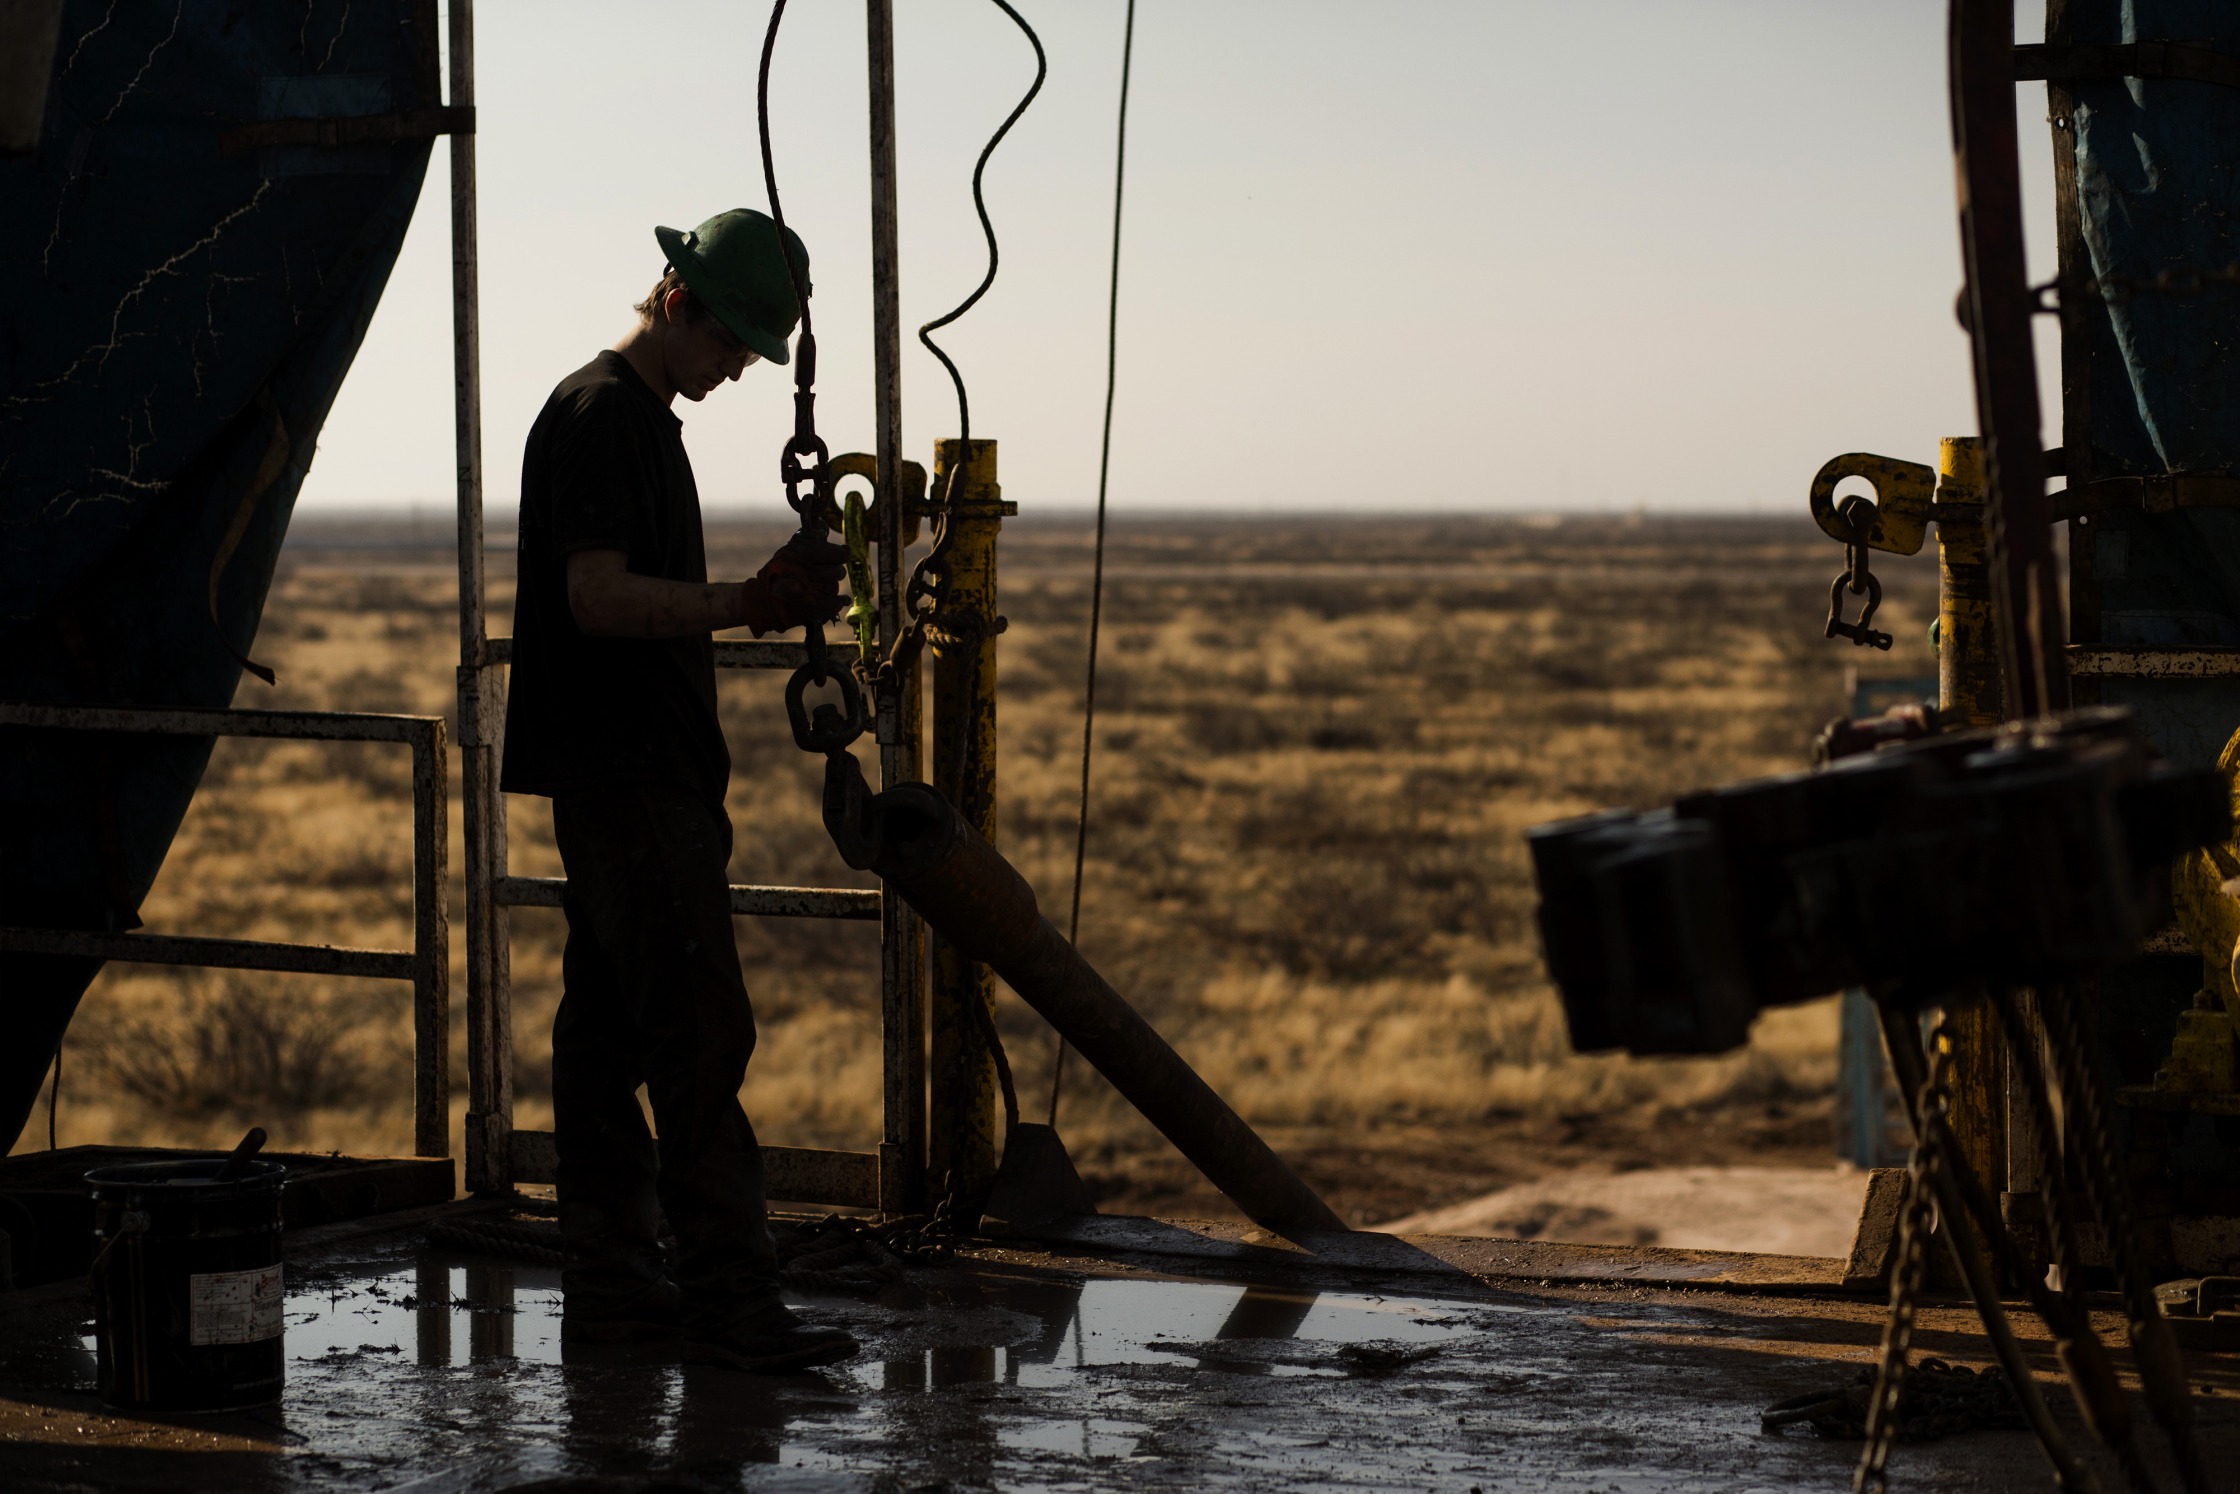 Oil Wells Creeping Into Texas Cities Herald Shale Era's Twilight